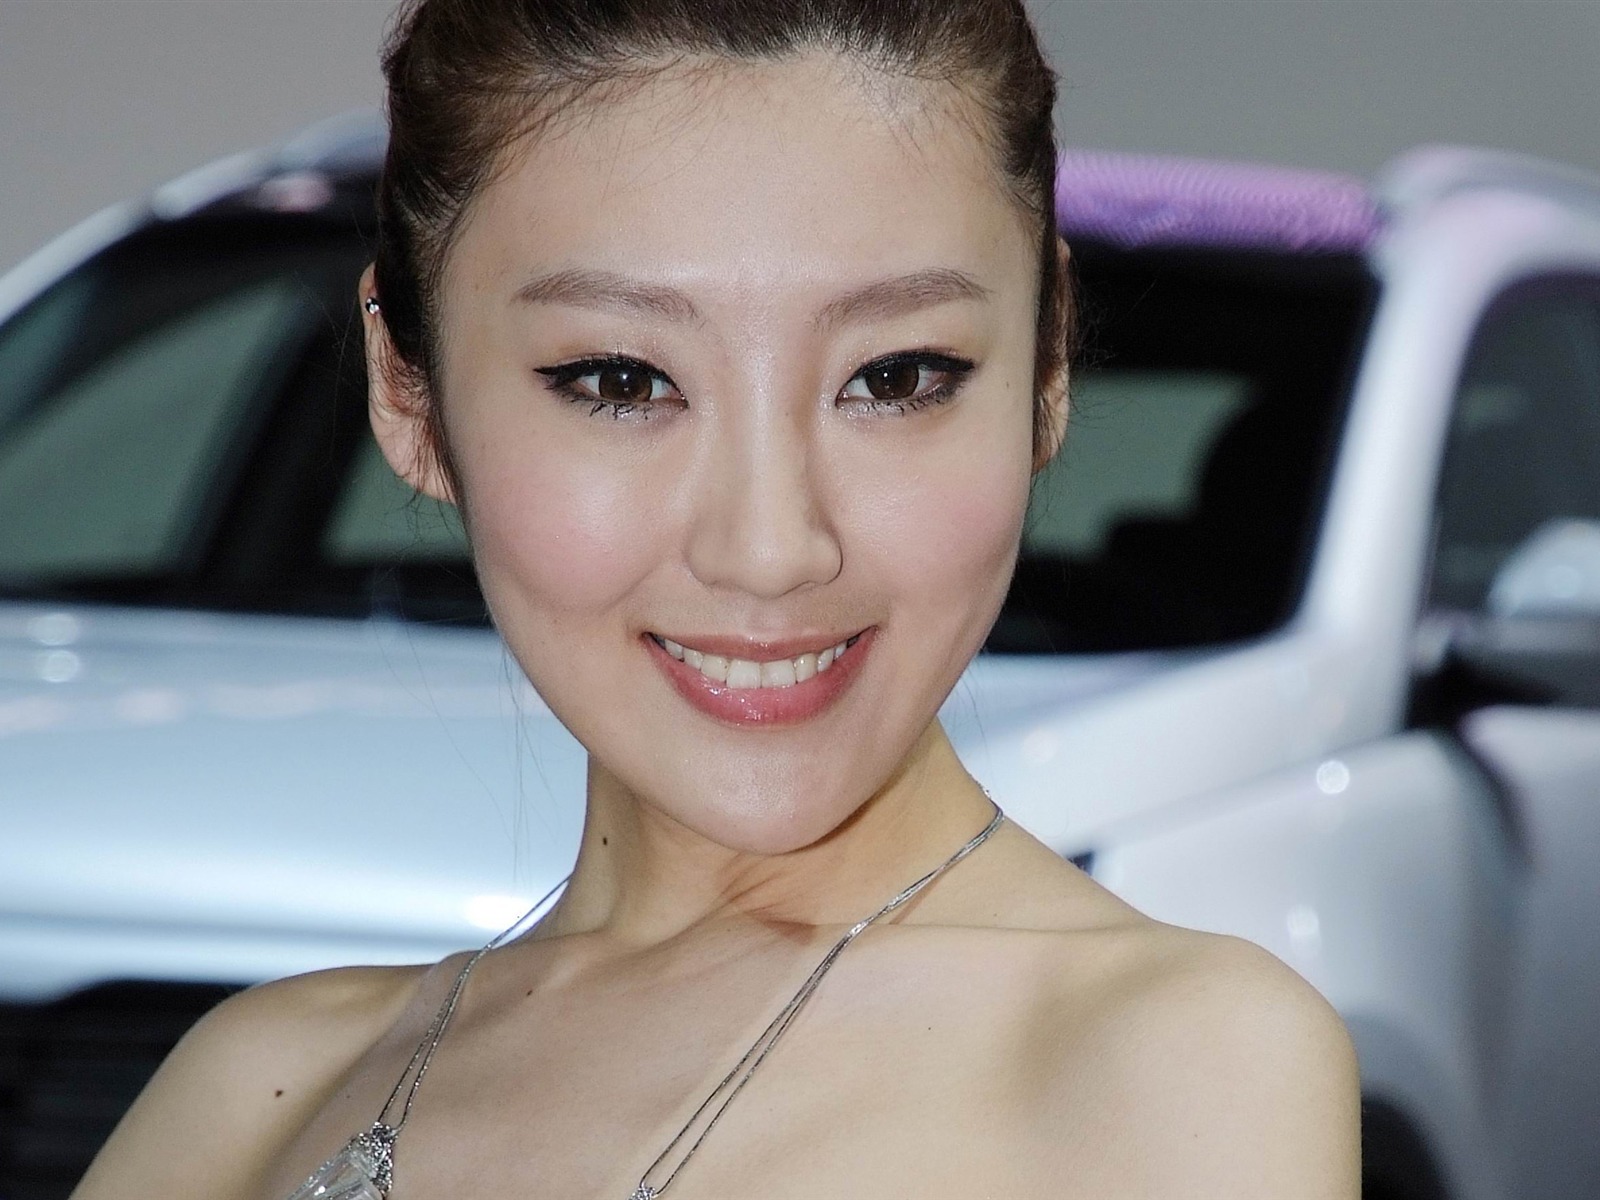 2010 Beijing International Auto Show beauty (rebar works) #24 - 1600x1200